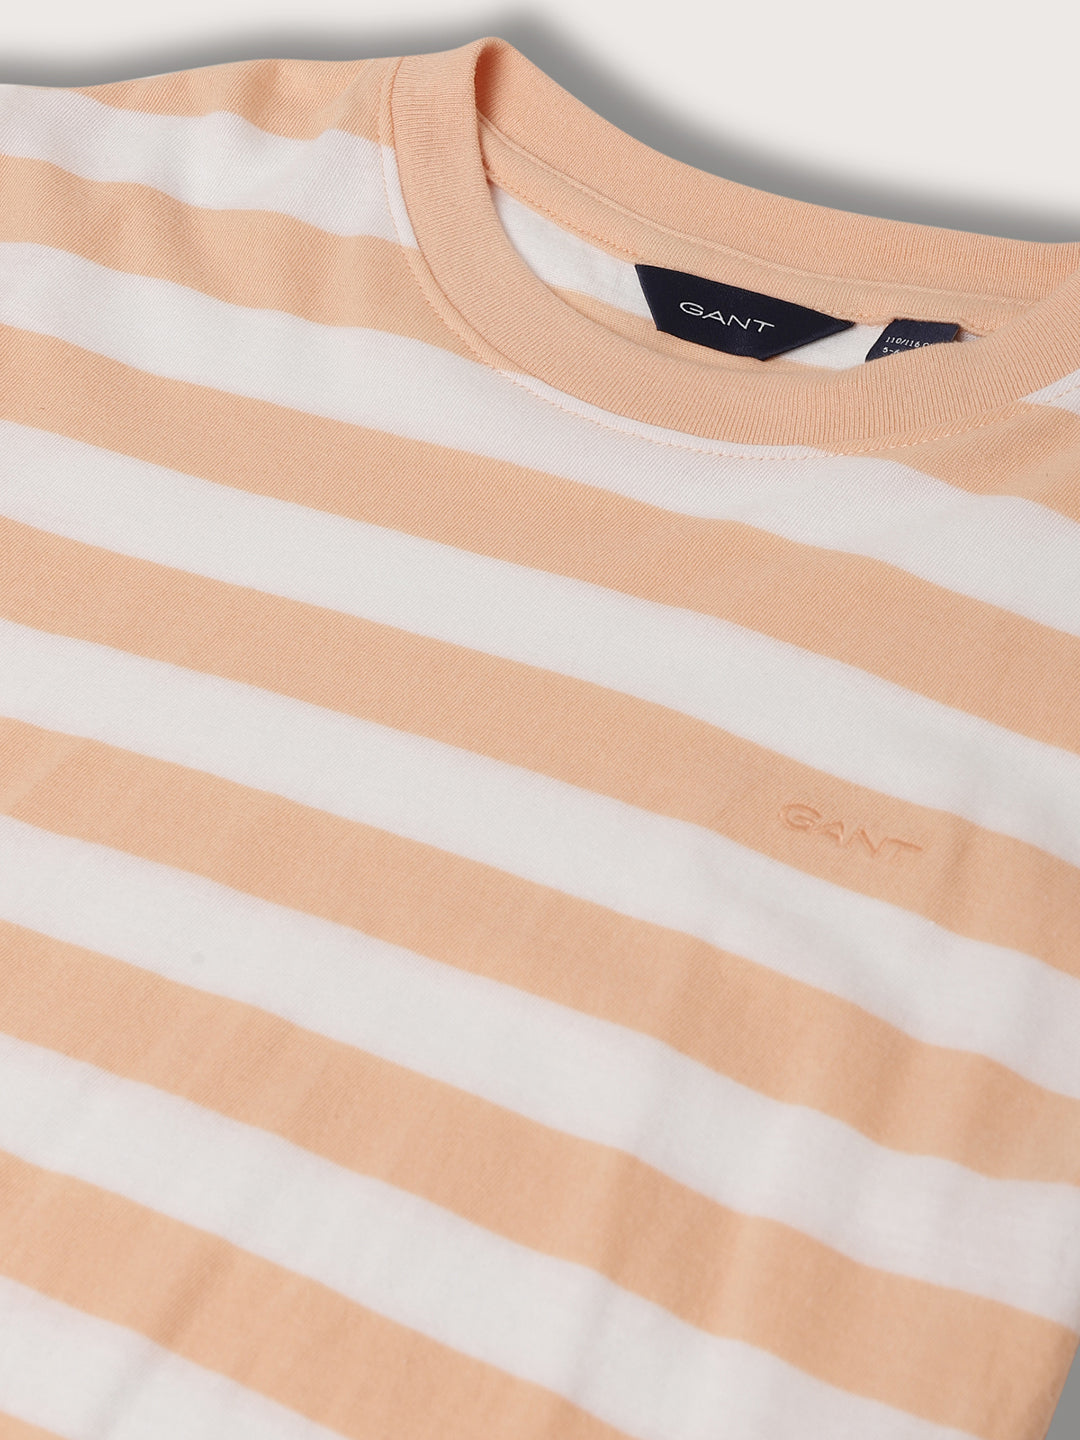 Gant Boys Striped Organic Cotton T-shirt